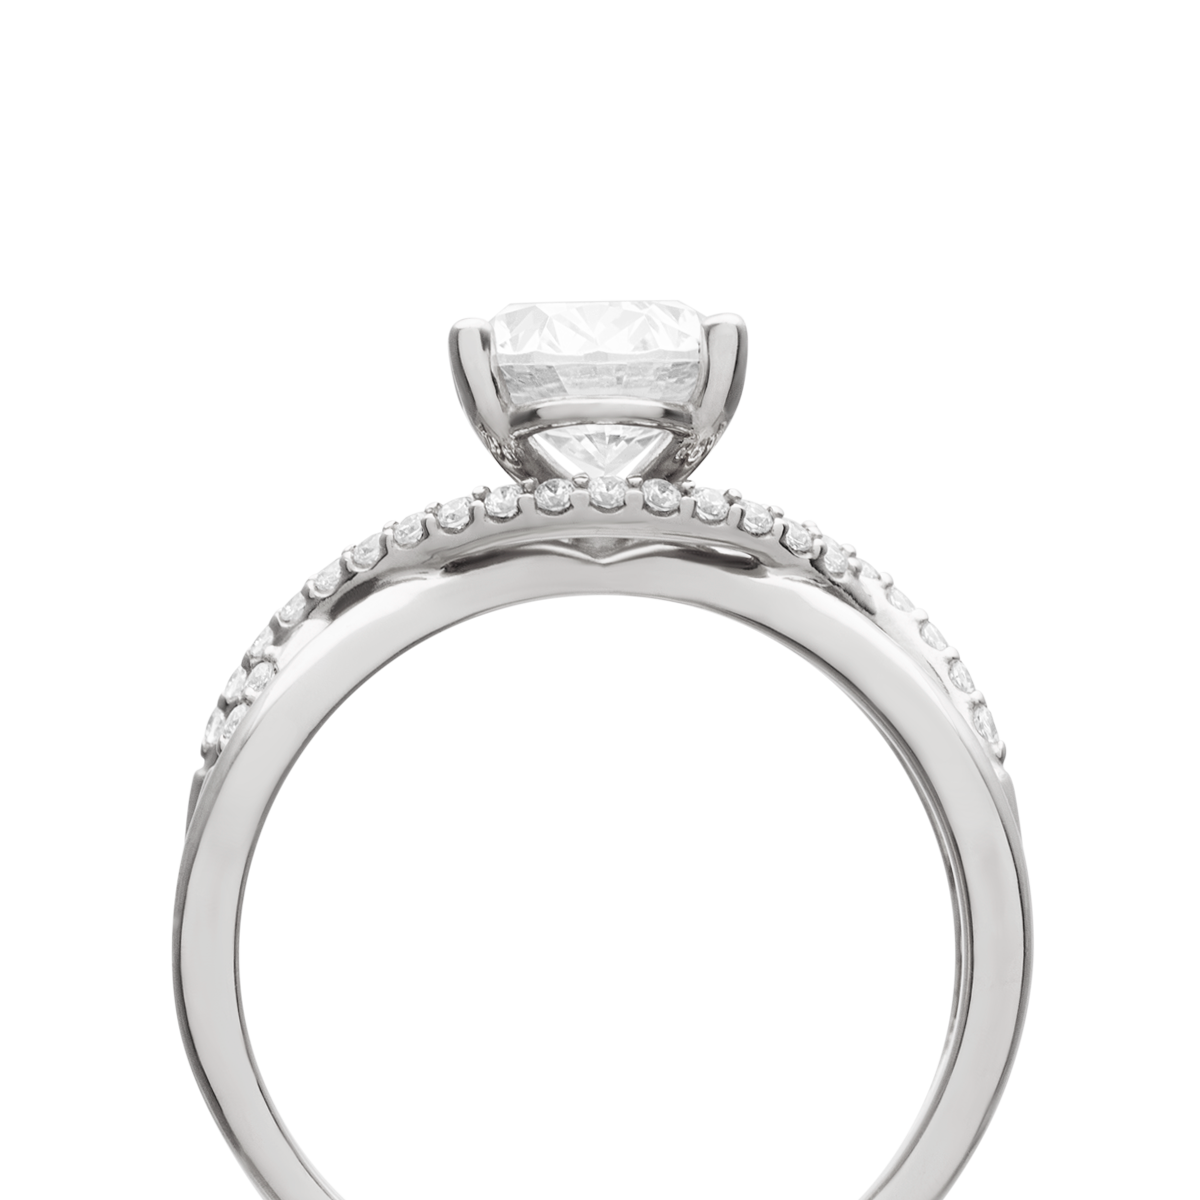 Oval Engagement + White Diamonds